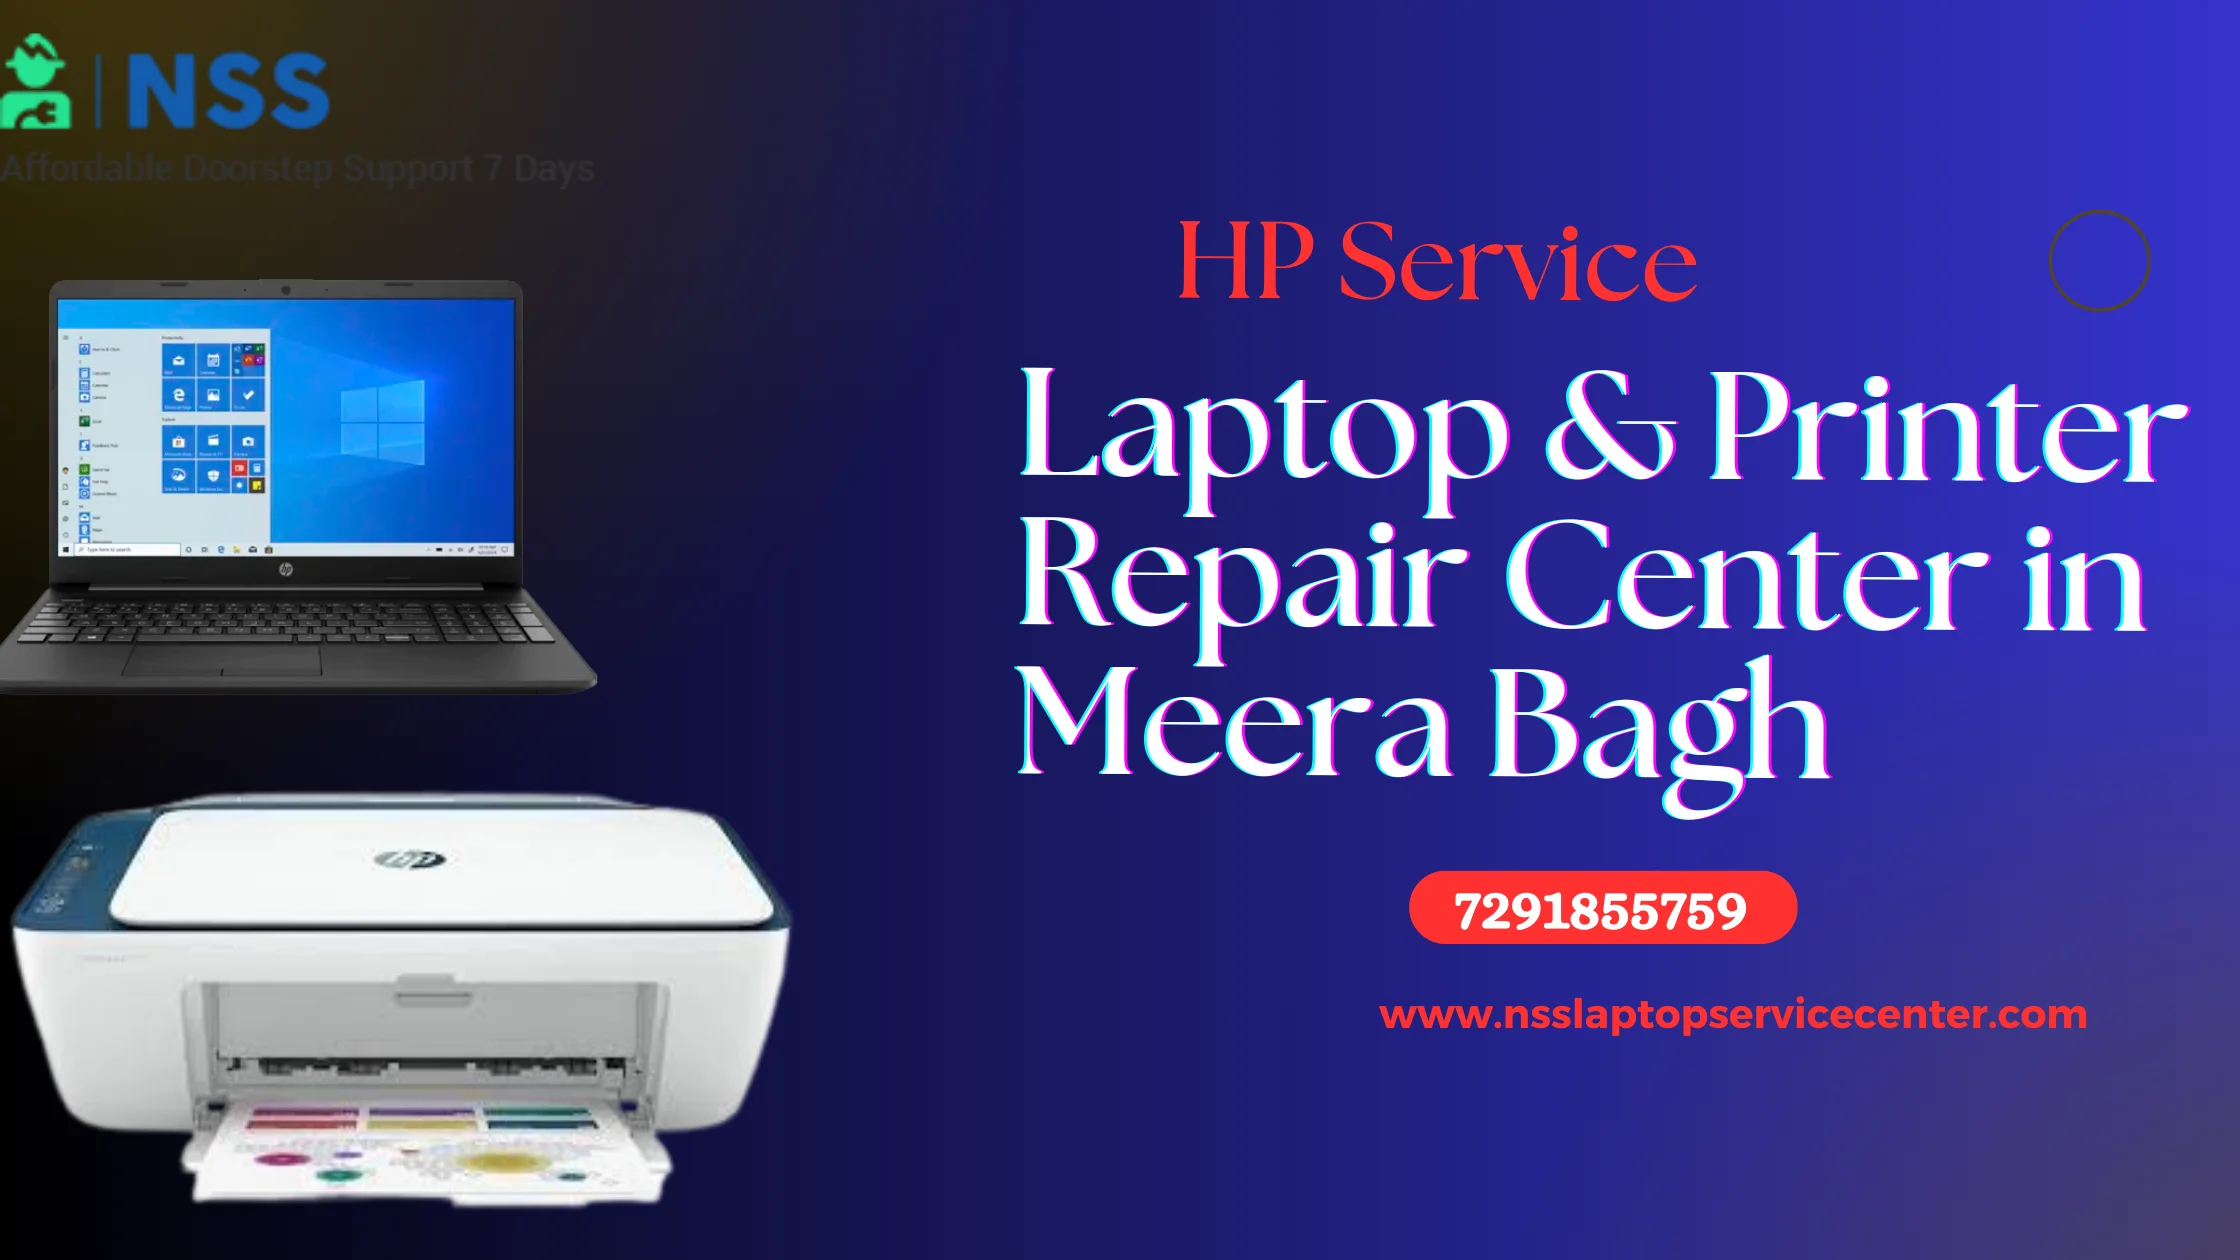 HP Service ( Laptop & Printer ) Repair Center in Meera Bagh Near Delhi